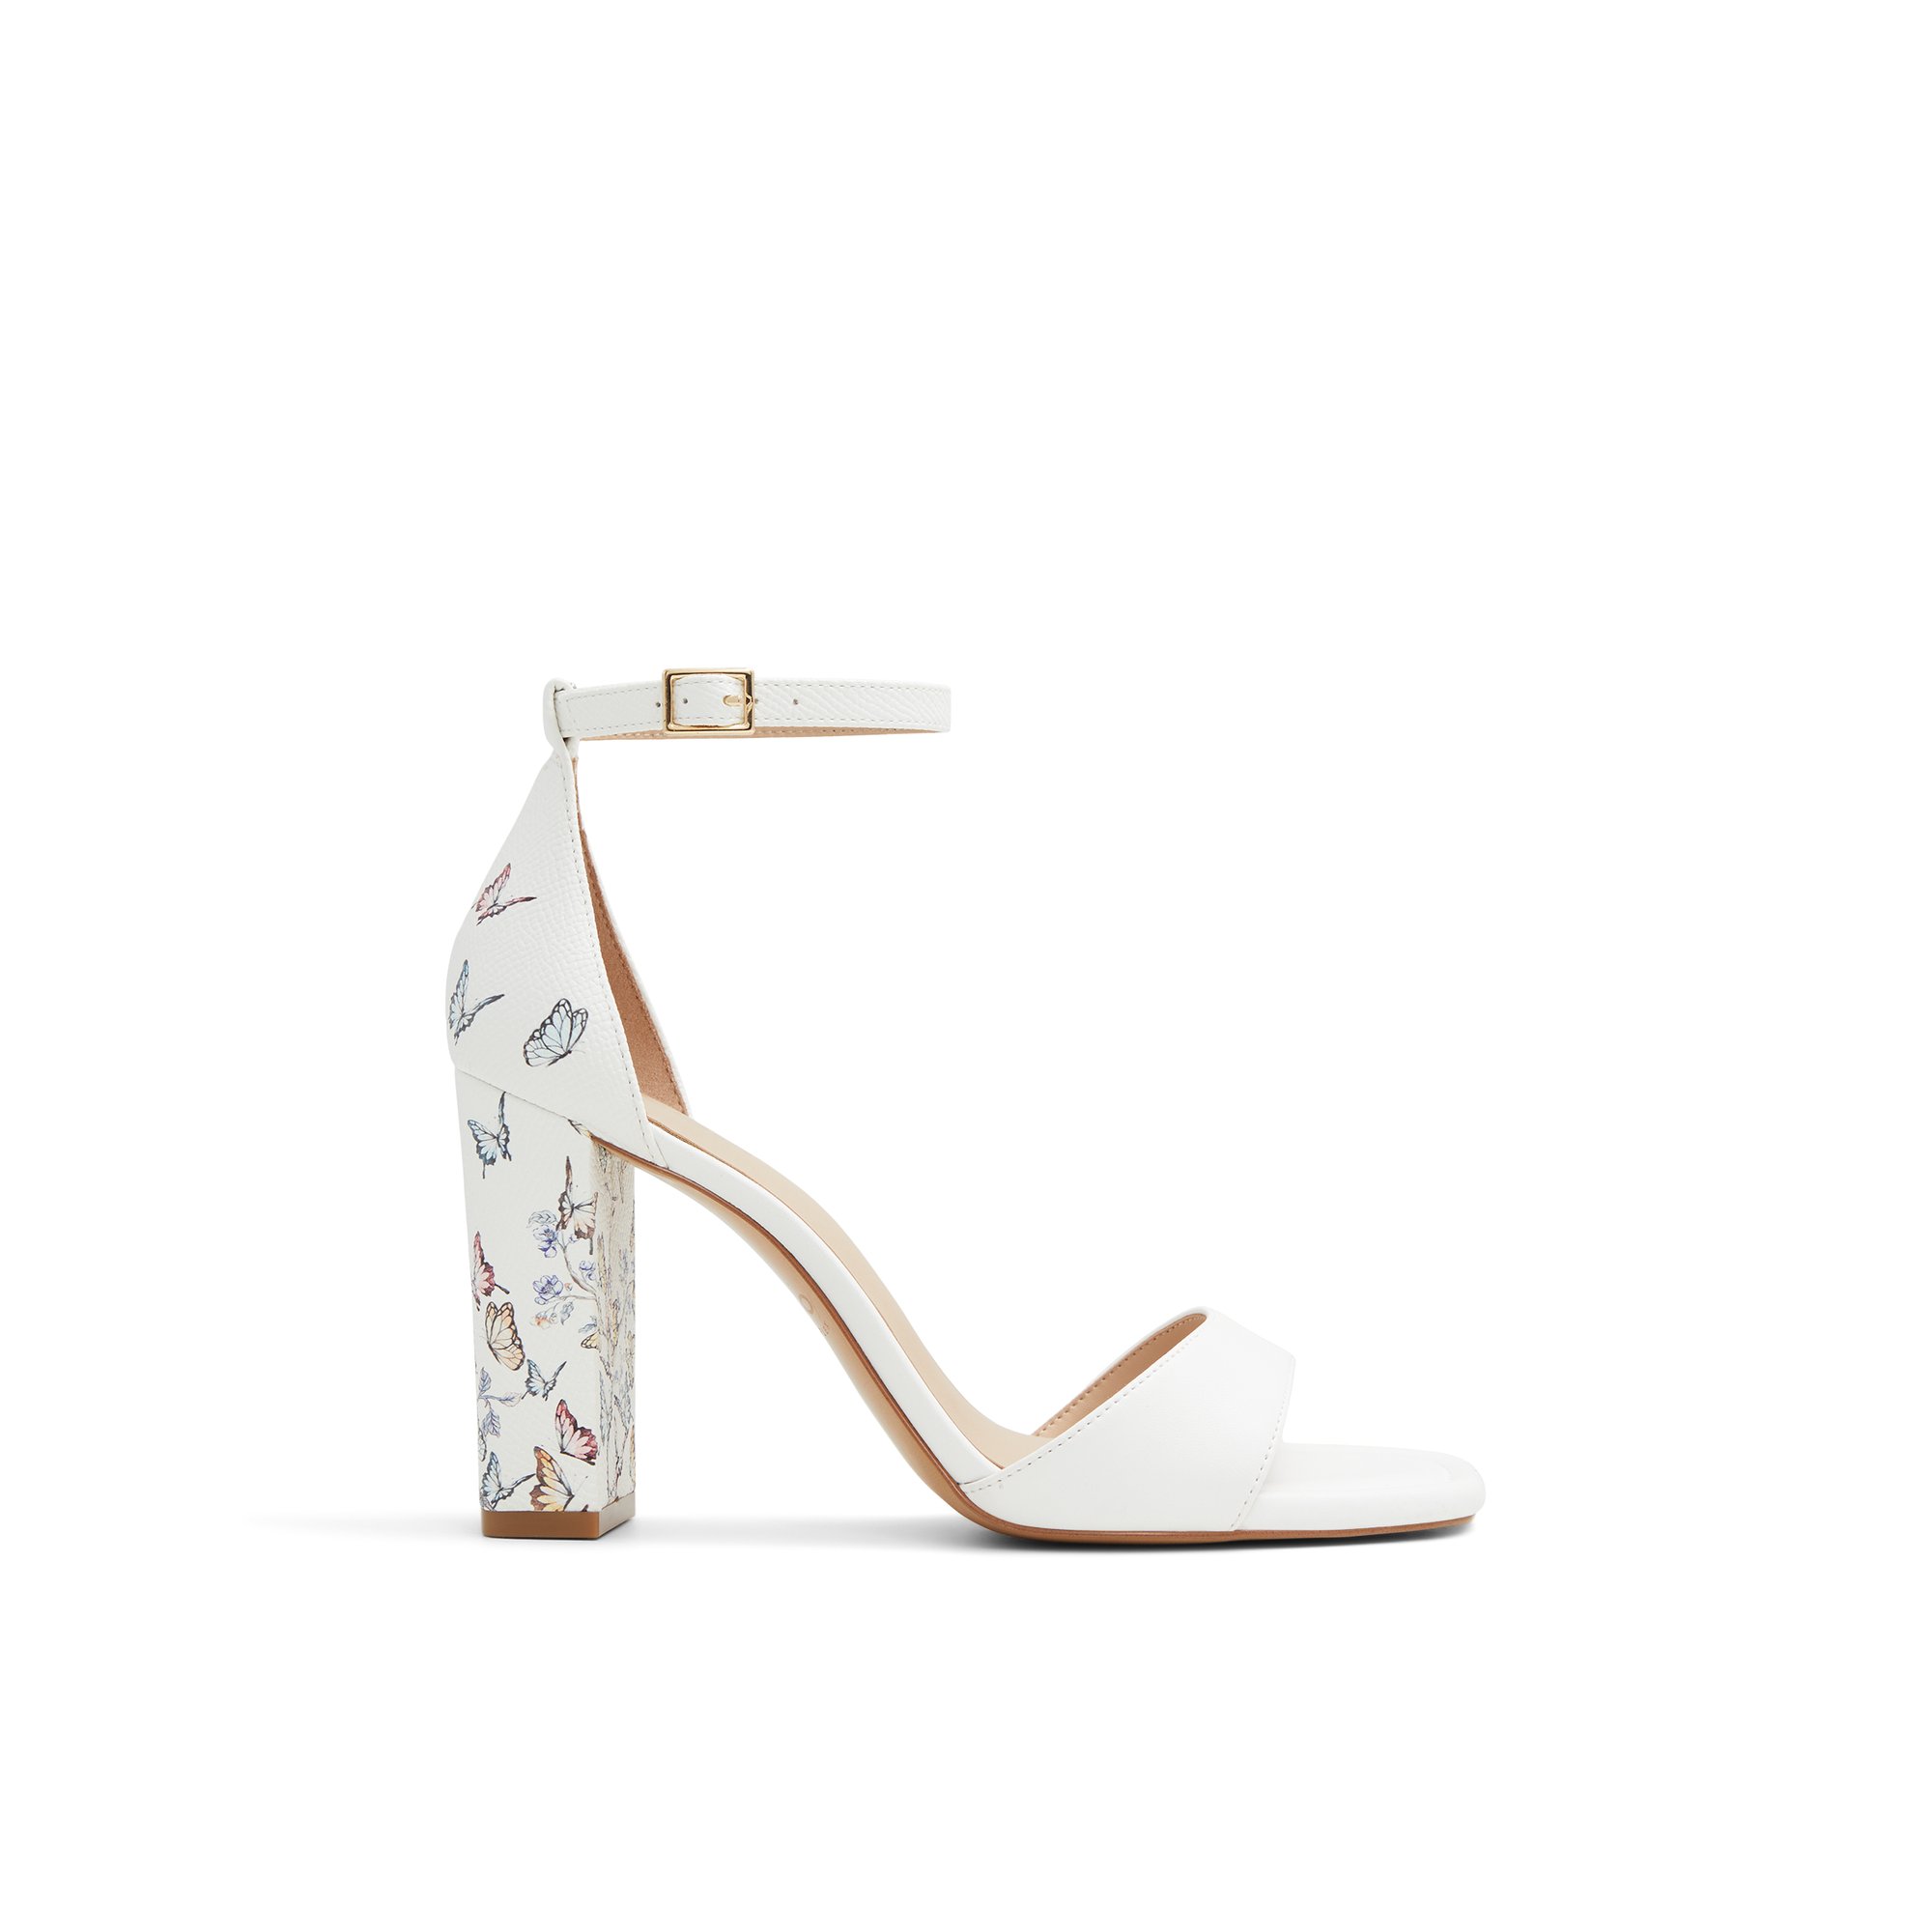 ALDO Enaegyn - Women's Strappy Sandal Sandals - White